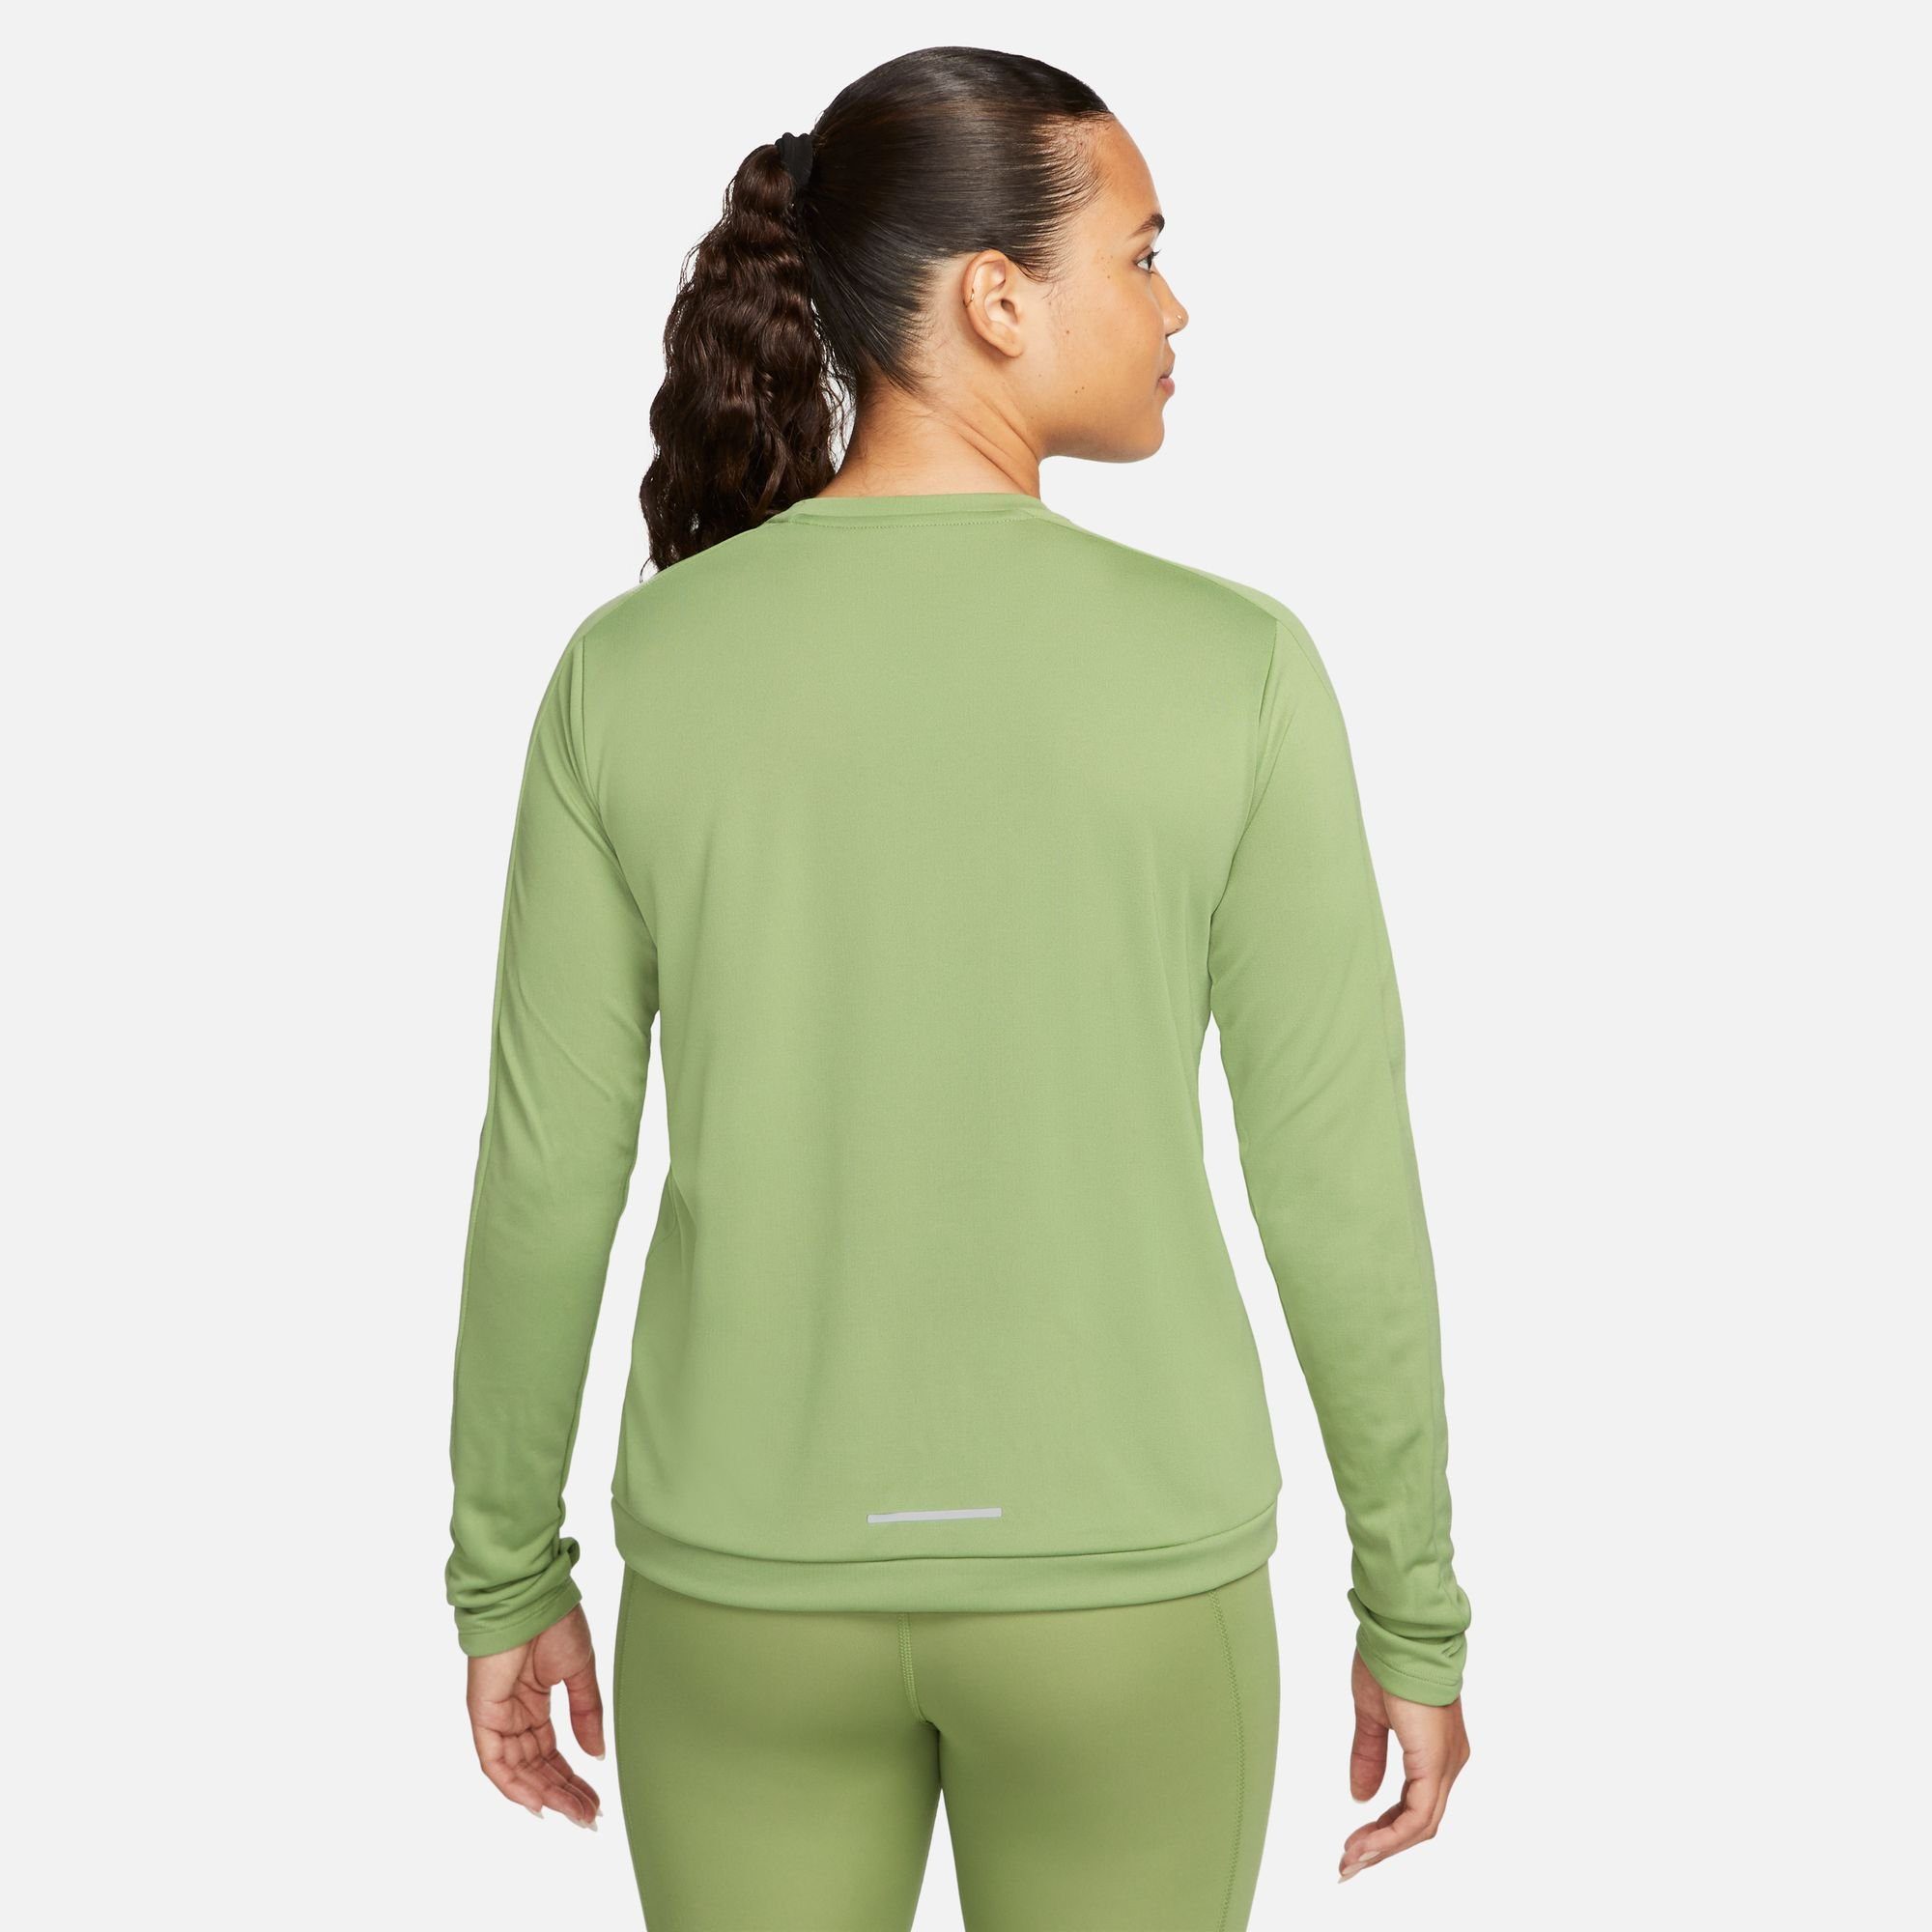 Nike CREW-NECK RUNNING grün TOP Laufshirt WOMEN'S DRI-FIT